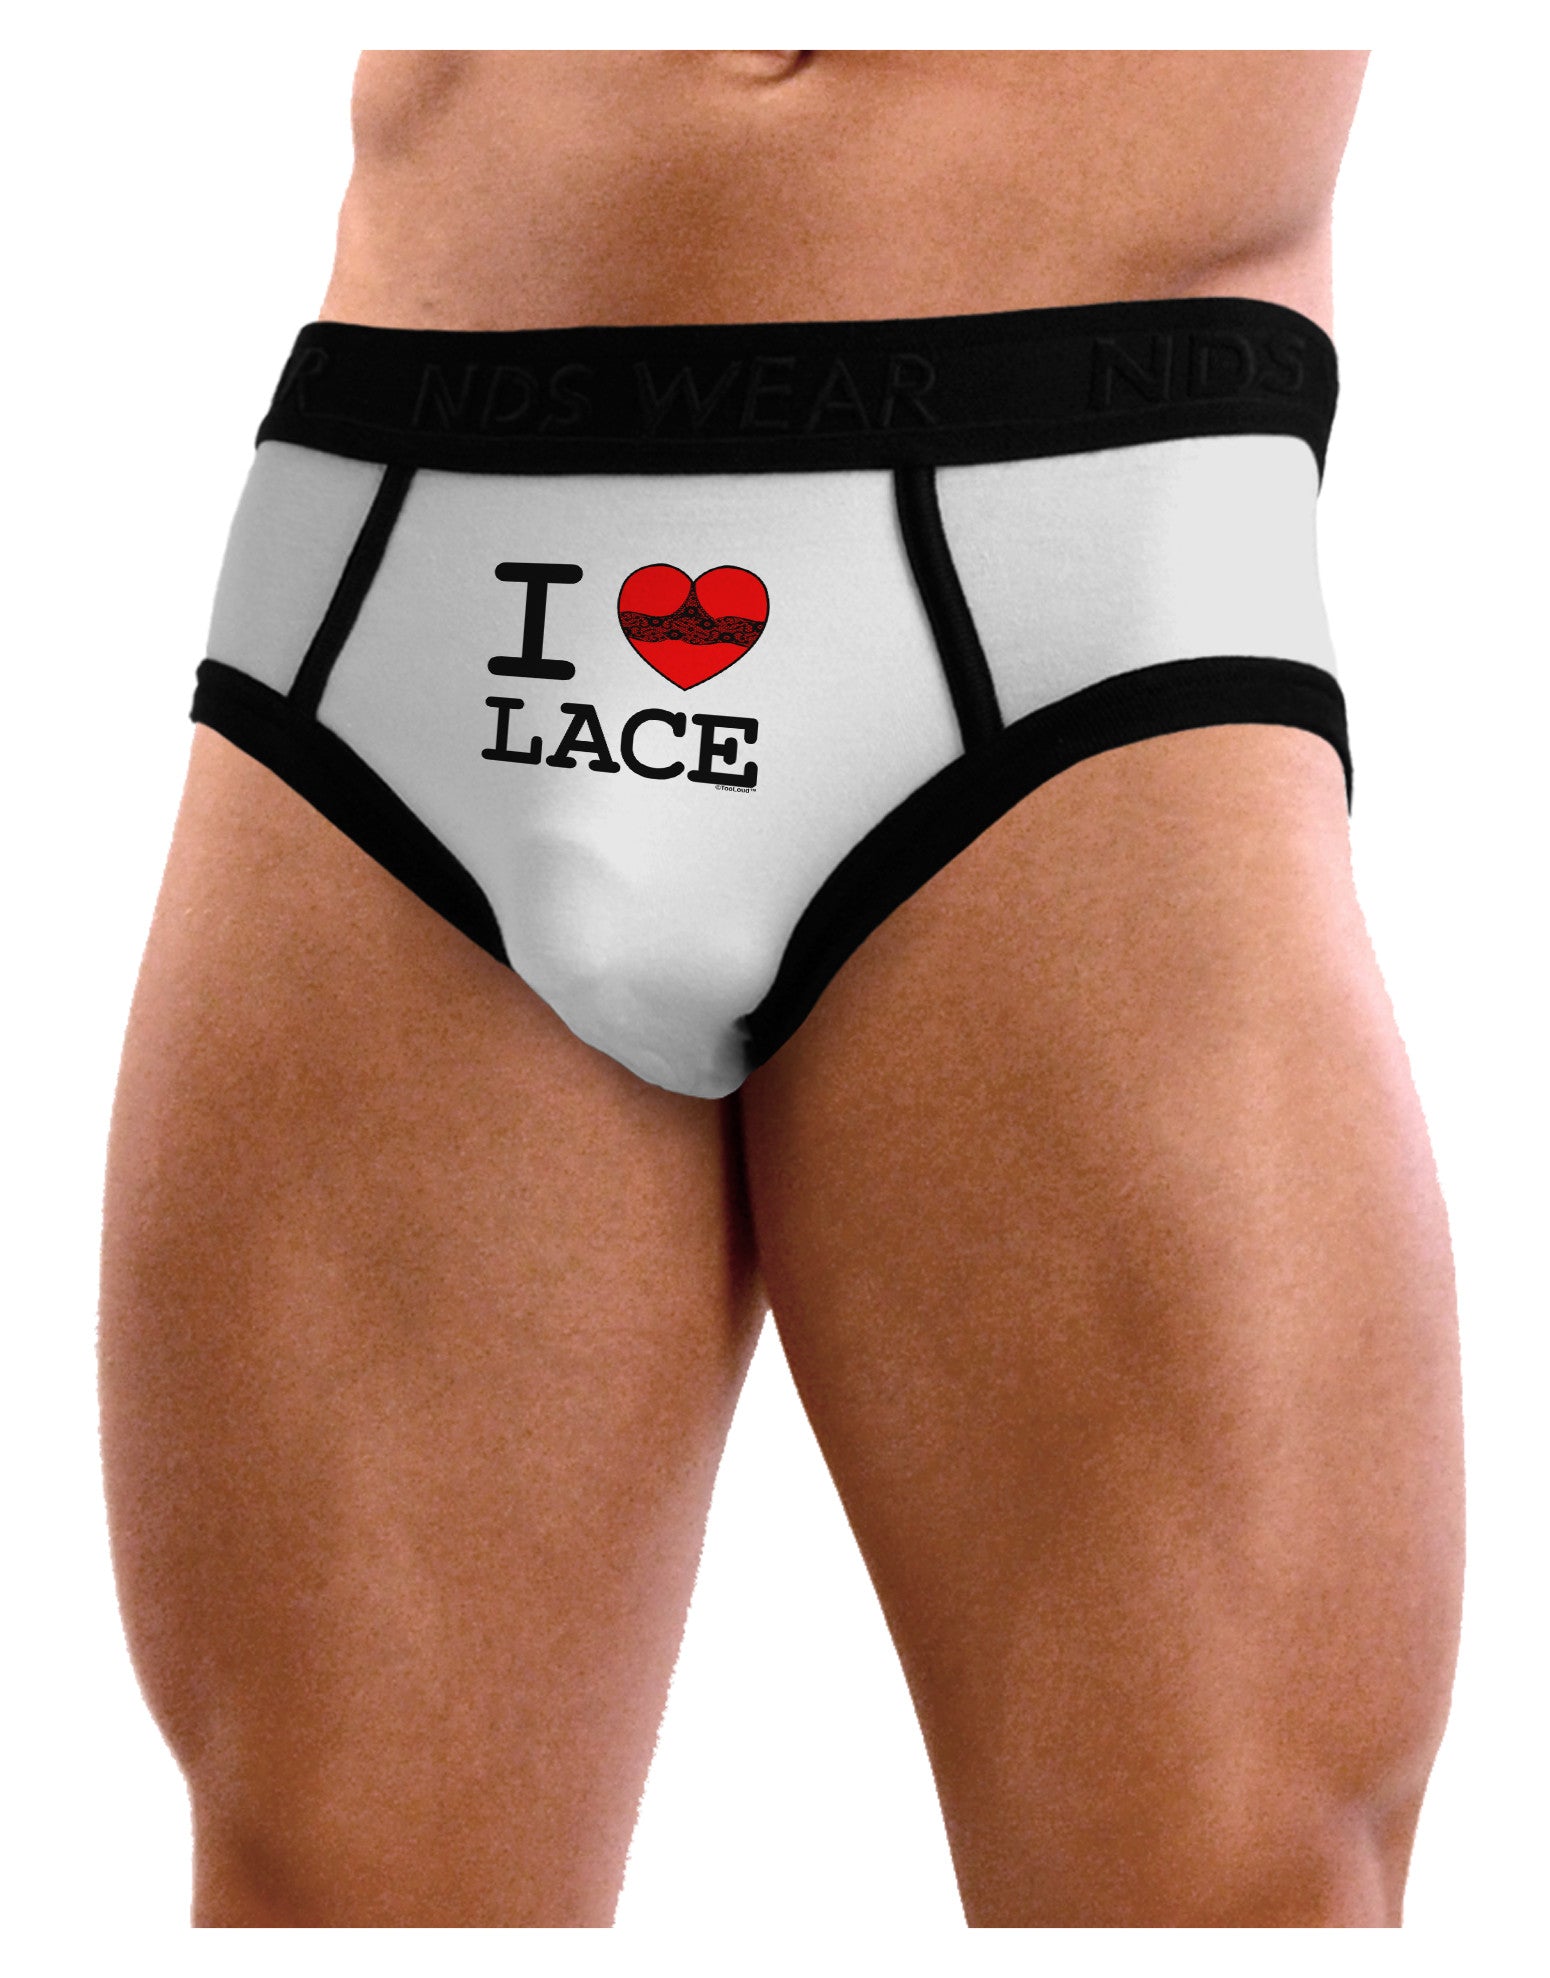 Men's Lace Panties  Men Are Wearing Lace Panties & Love Them